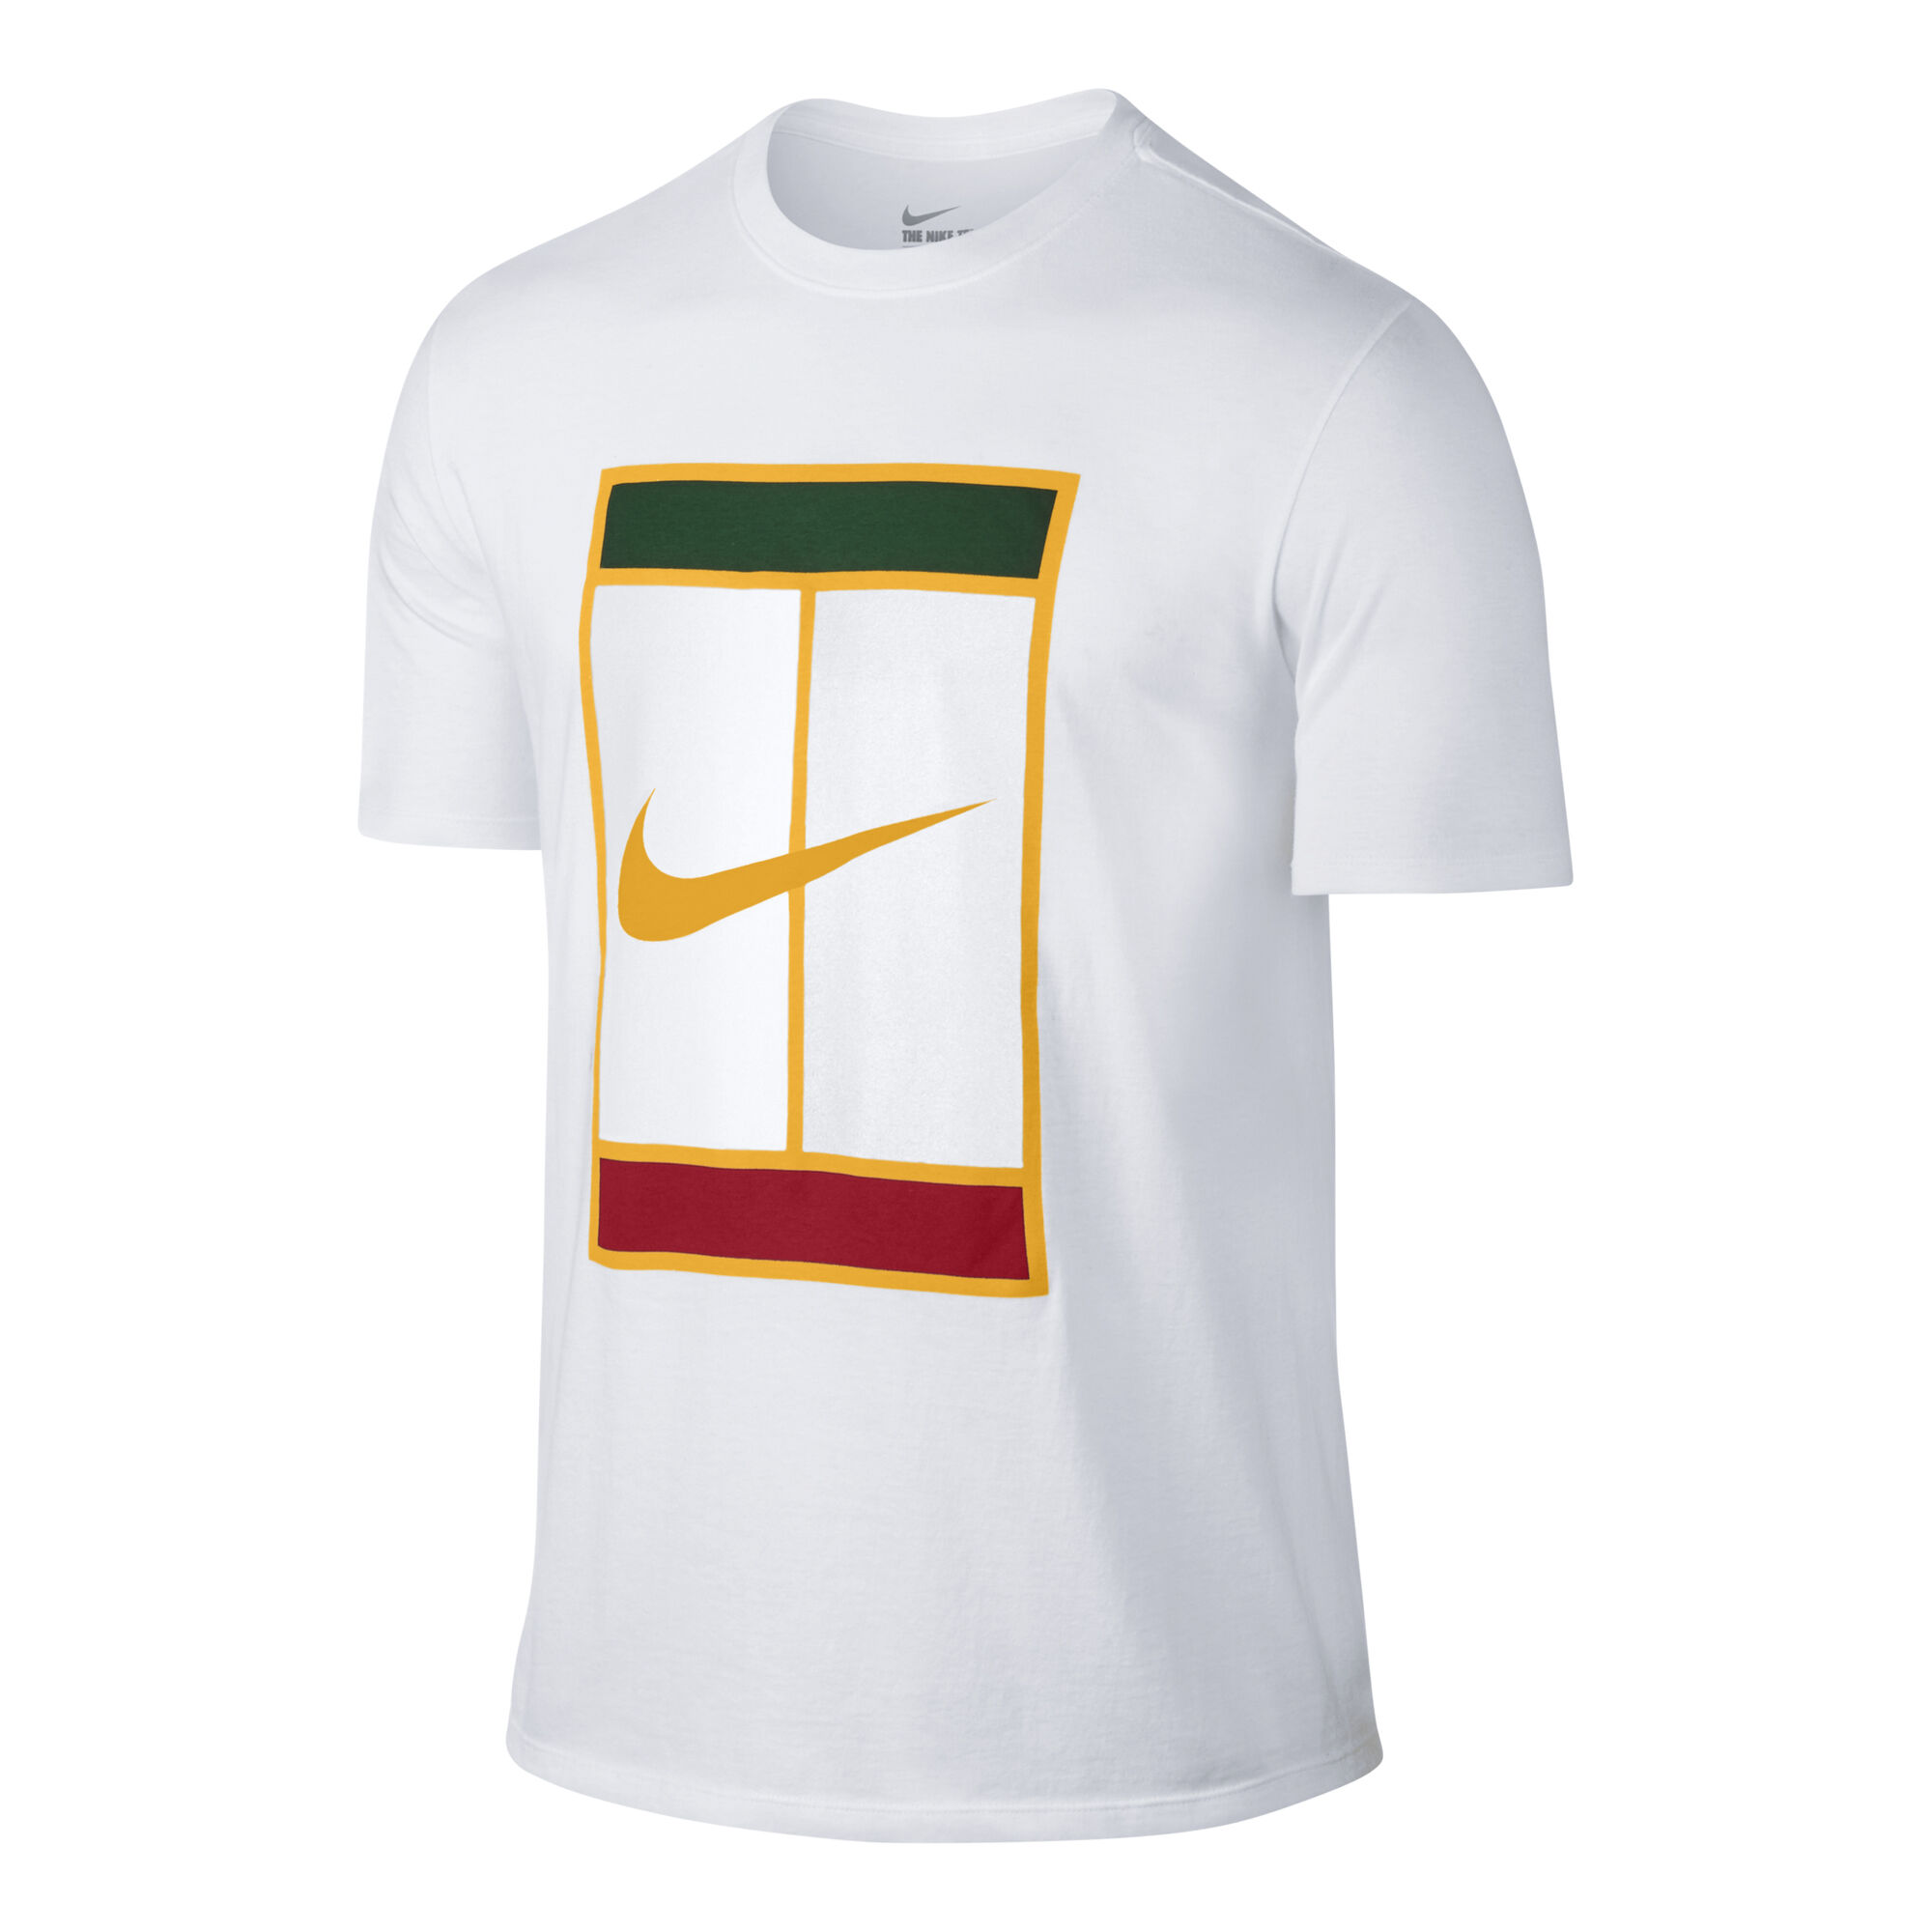 Nike Court Logo Camiseta De Manga Corta Exclusivo Hombres - Blanco, Amarillo compra online | Tennis-Point